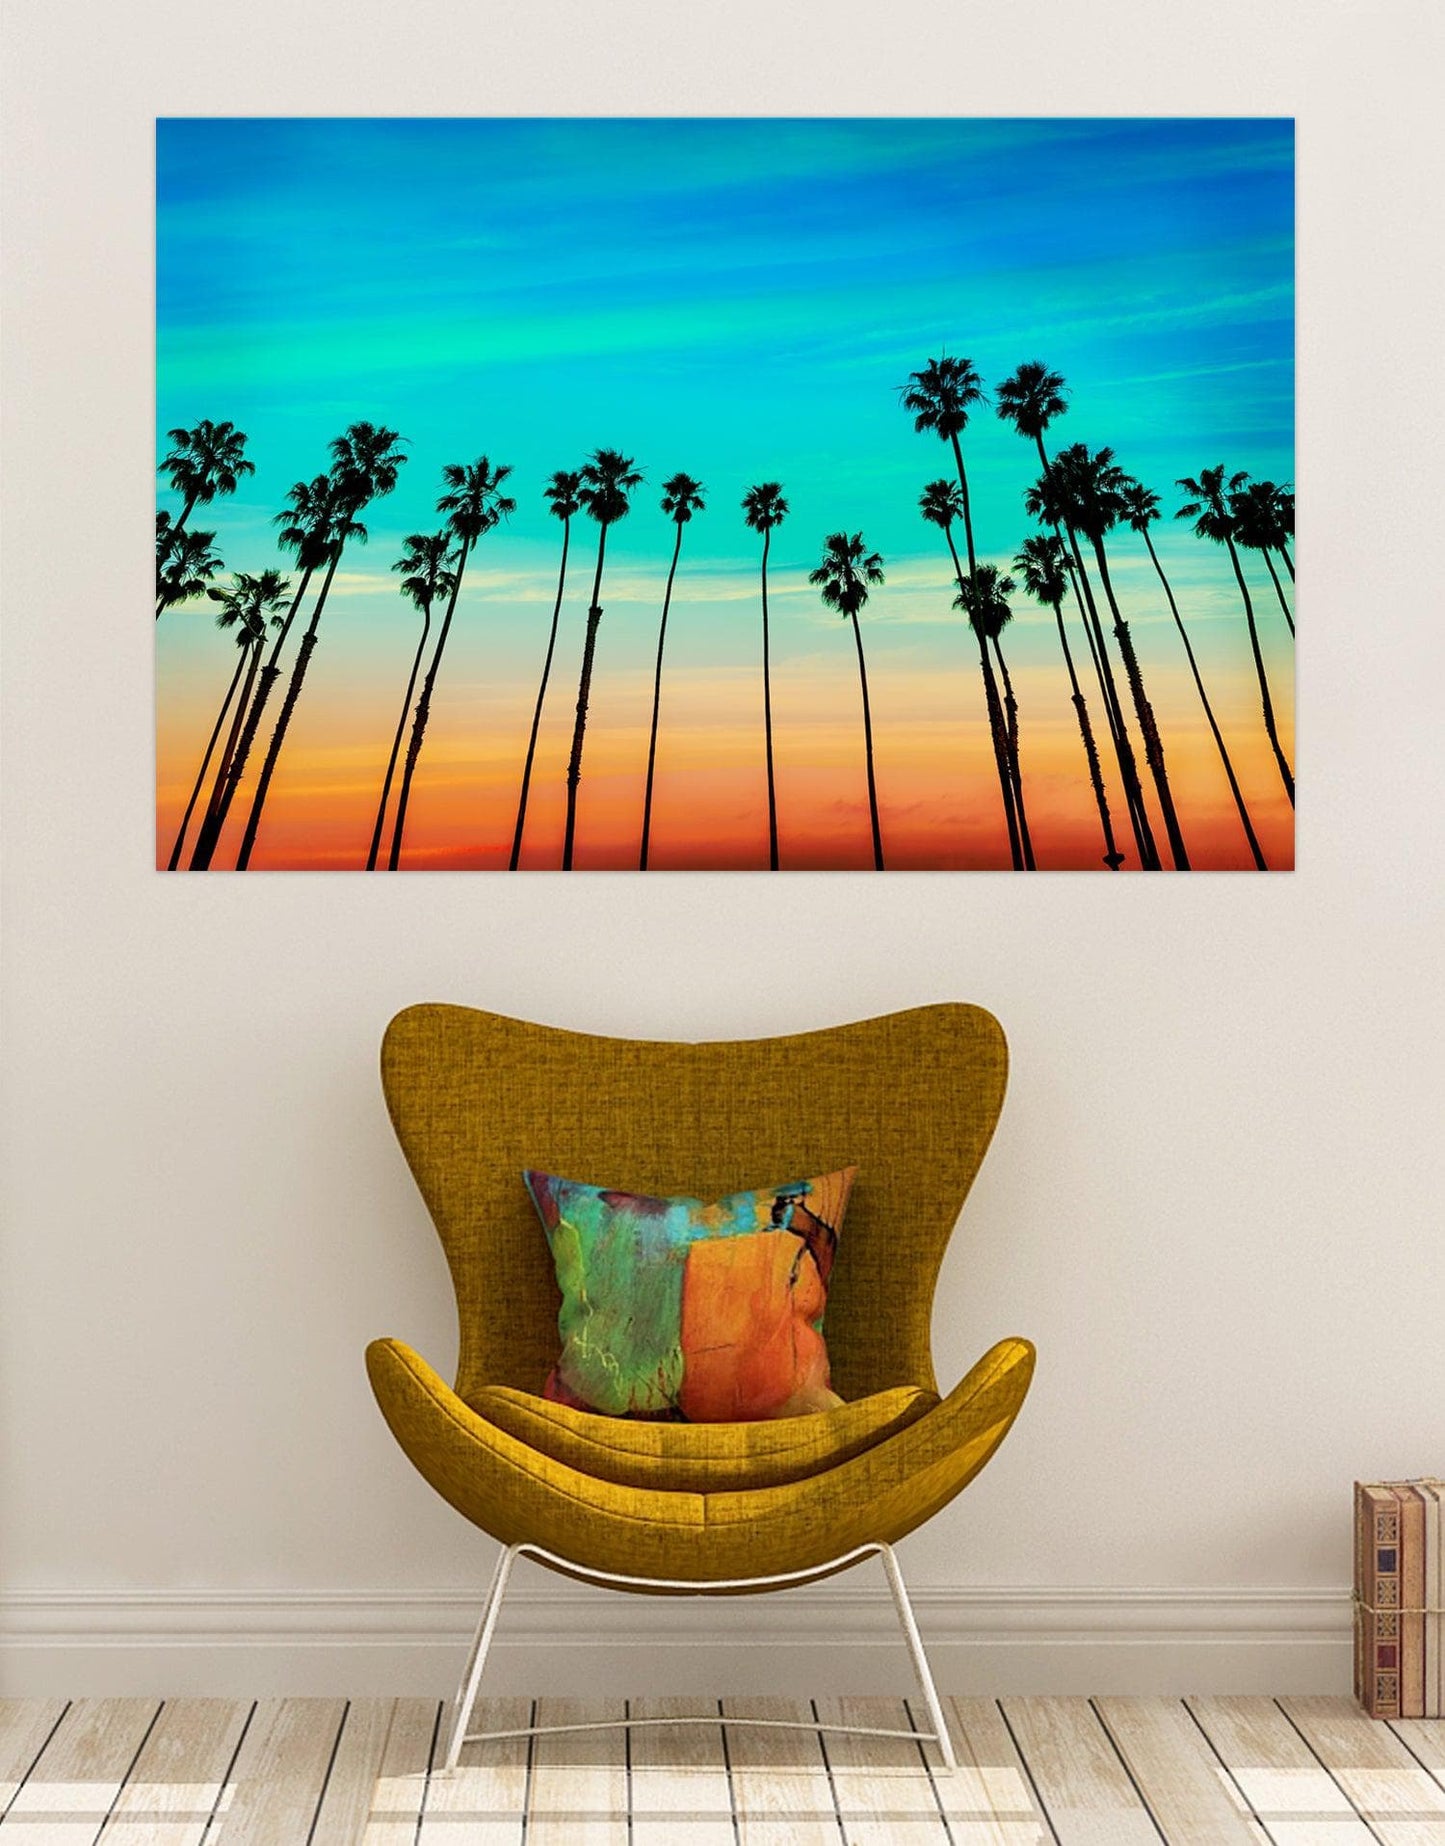 California SoCal L.A. Tropical Sunset Palm Trees Glossy Photo Print. #P1020